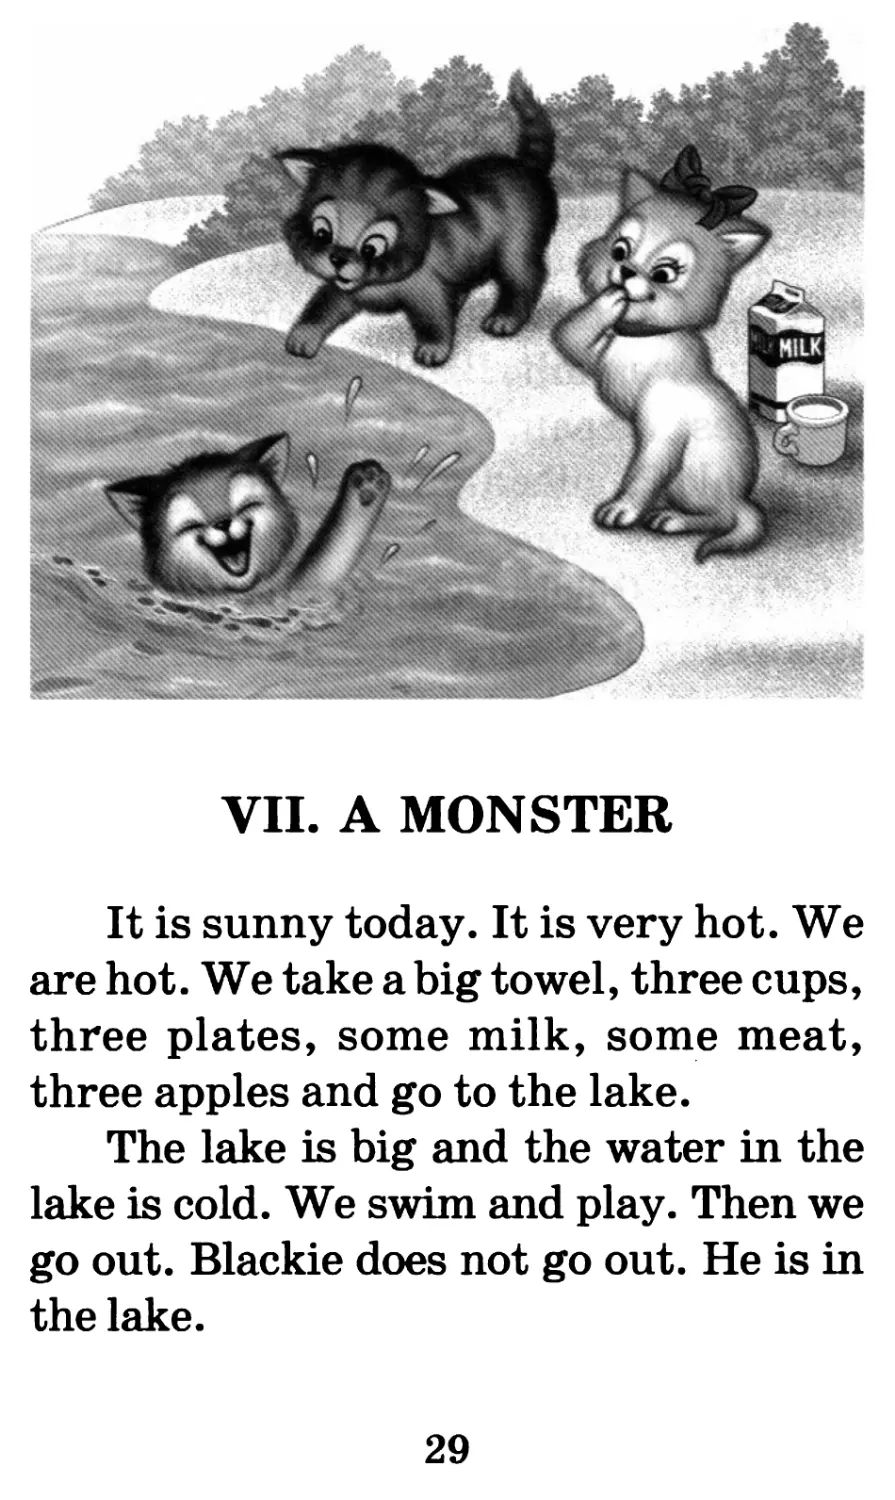 VII. A Monster